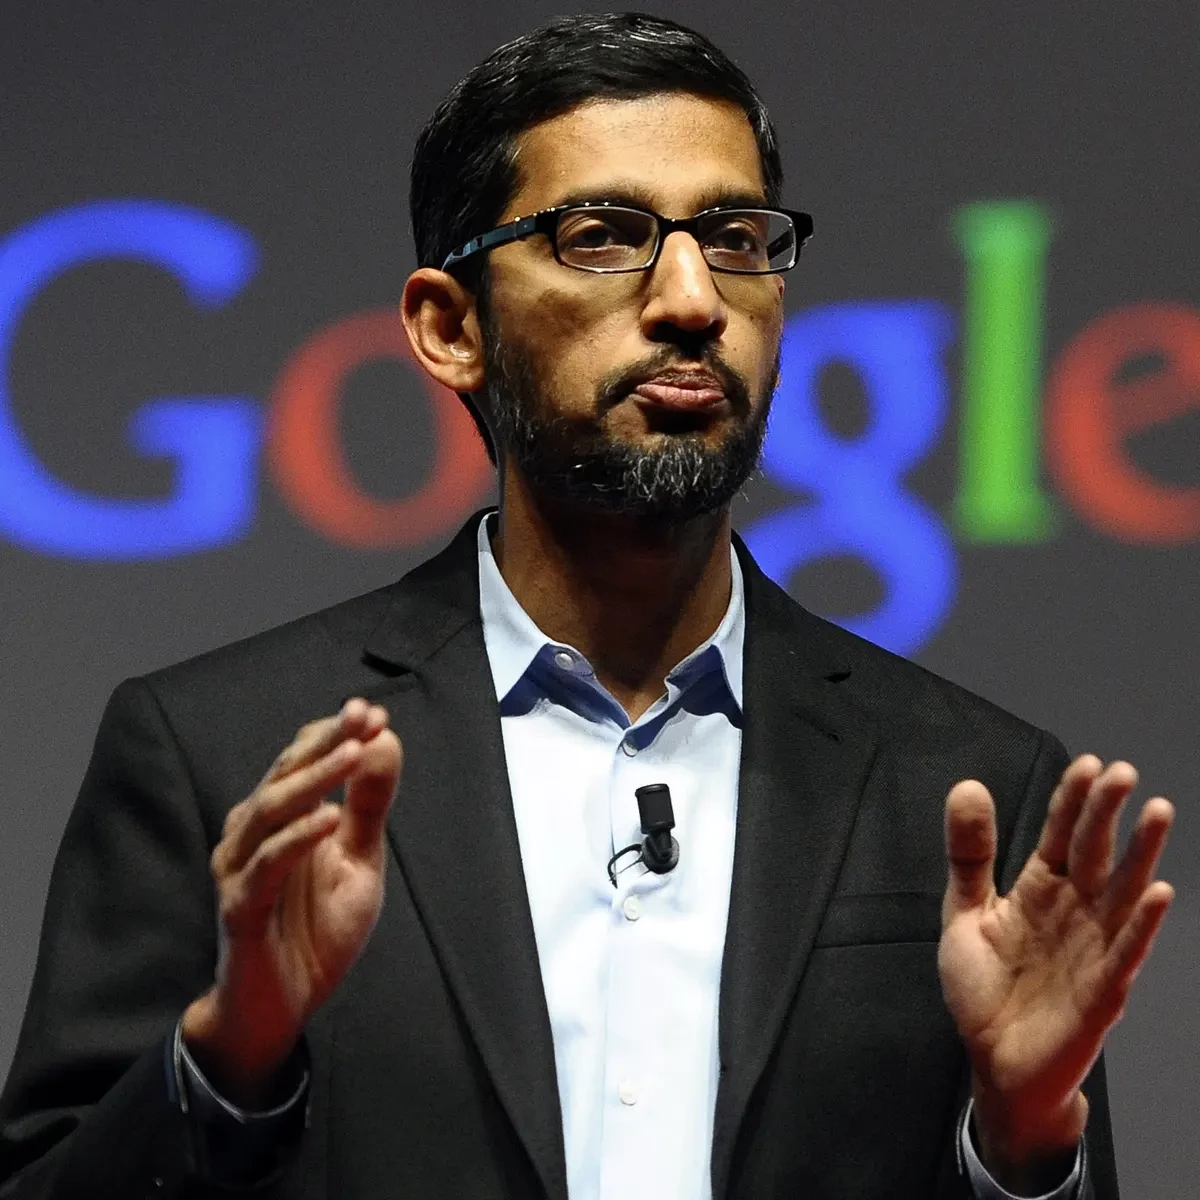 Google’s Chief Executive Officer, CEO, Sundar Pichai